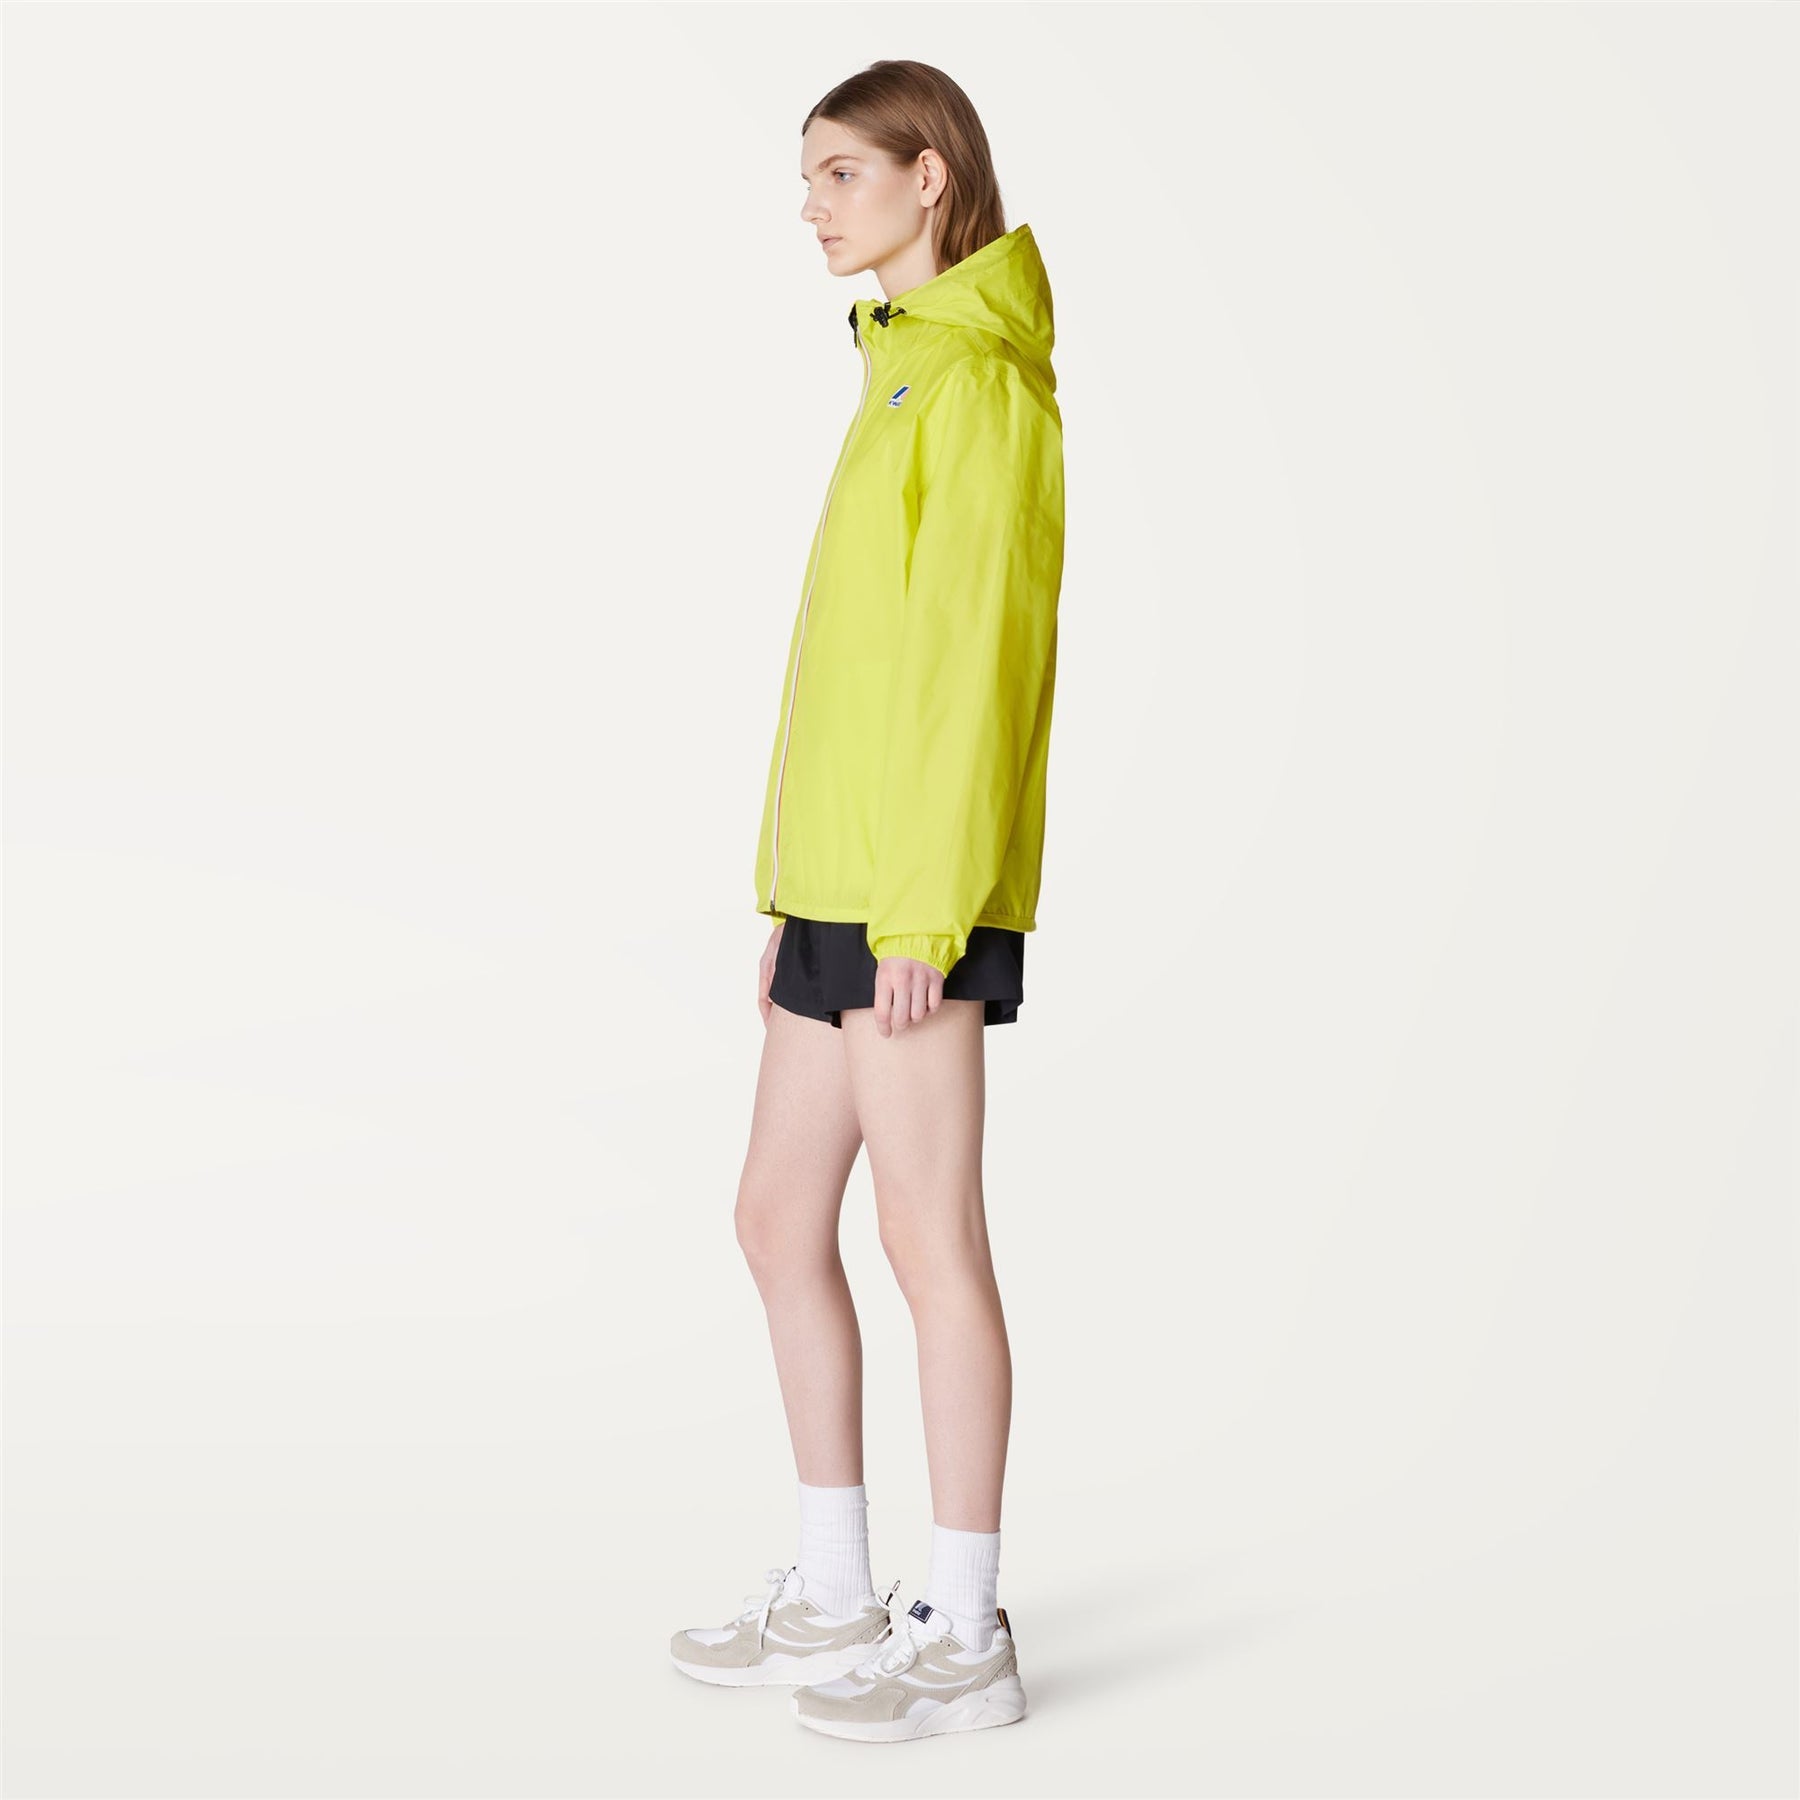 Claude - Unisex Packable Full Zip Waterproof  Rain Jacket in Green Lime